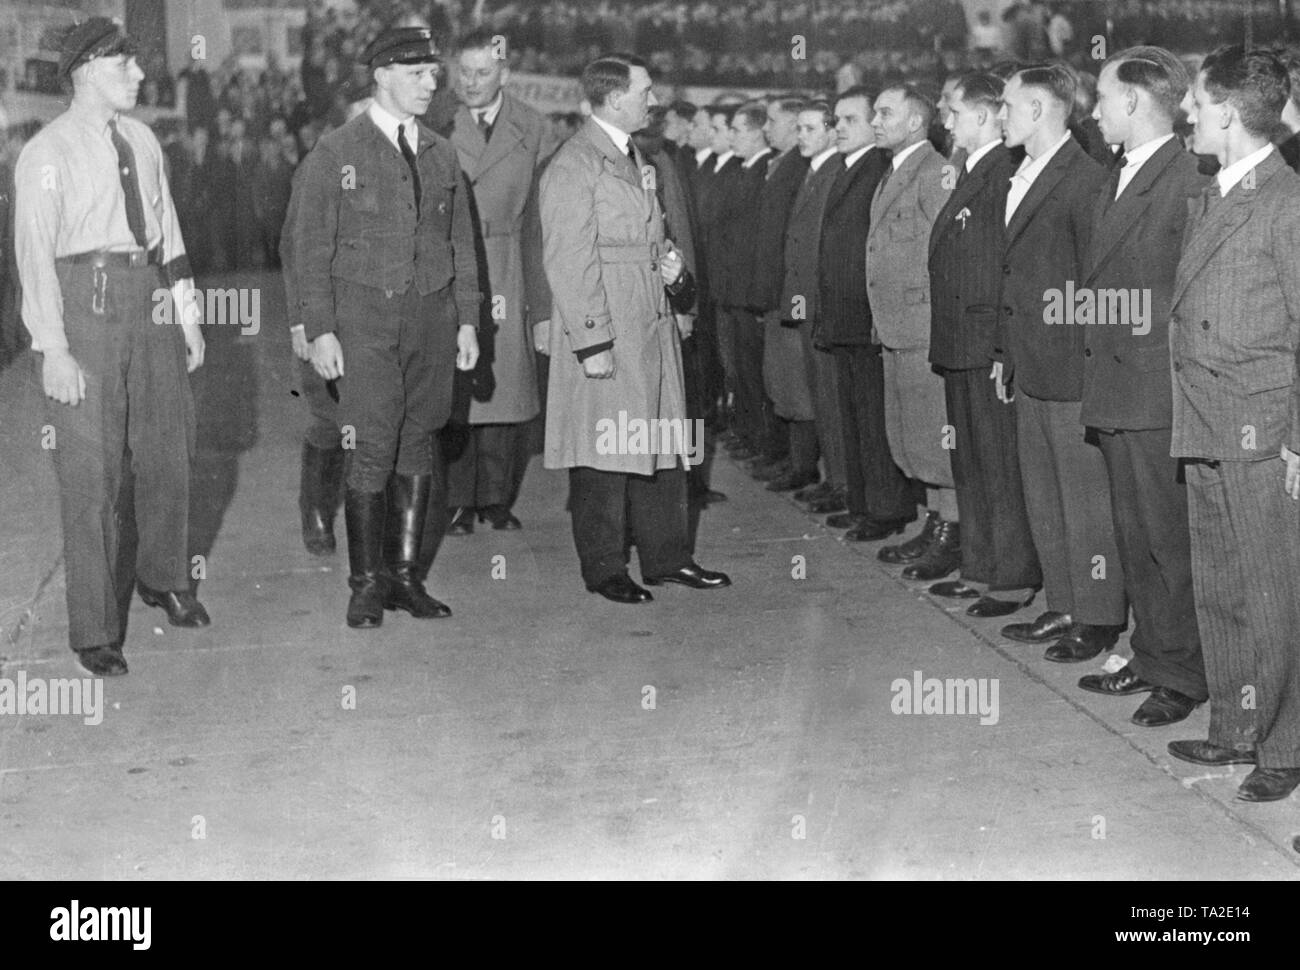 Hitler In Uniform Immagini e Fotos Stock - Alamy